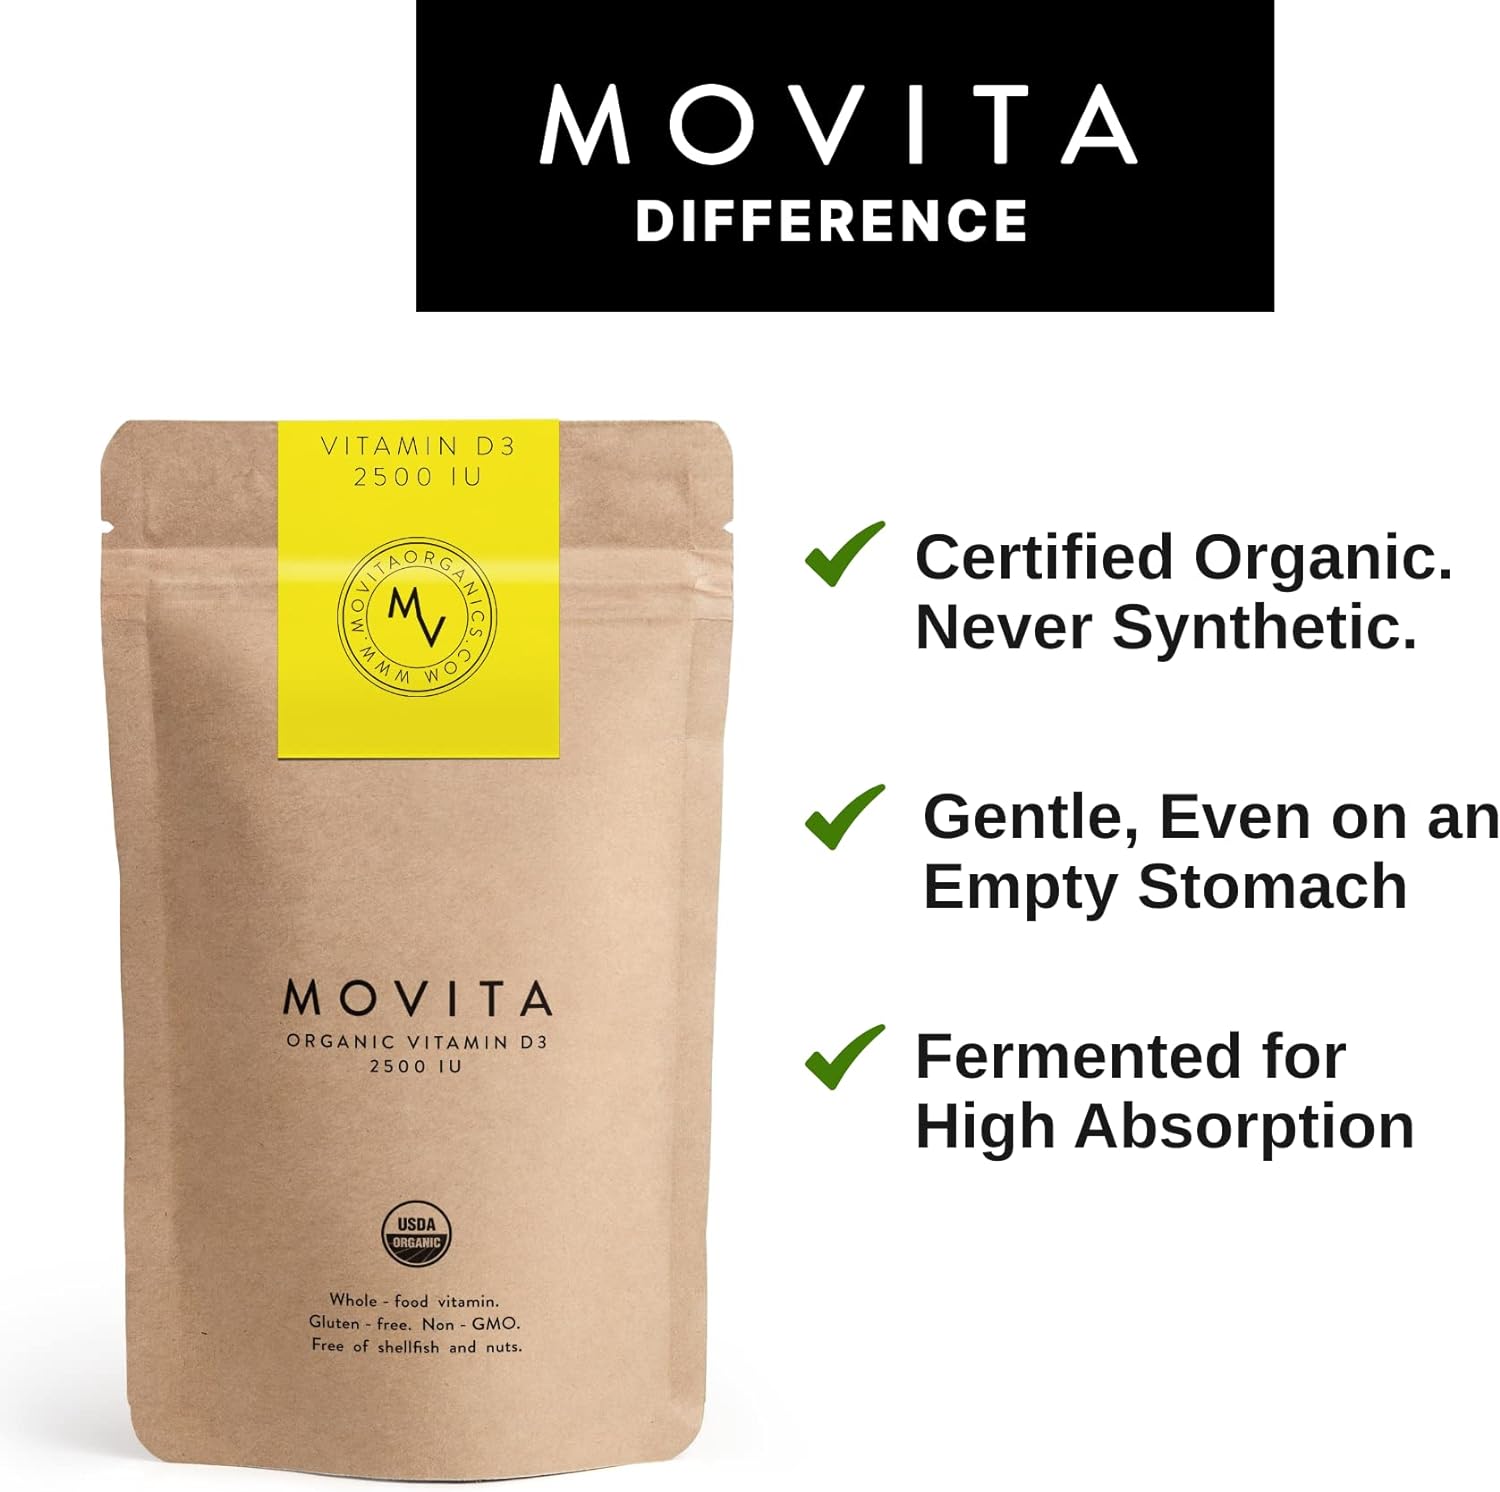 Movita Organics Womens Multivitamin and D3 Pouch Bundle - 30 Day Supply